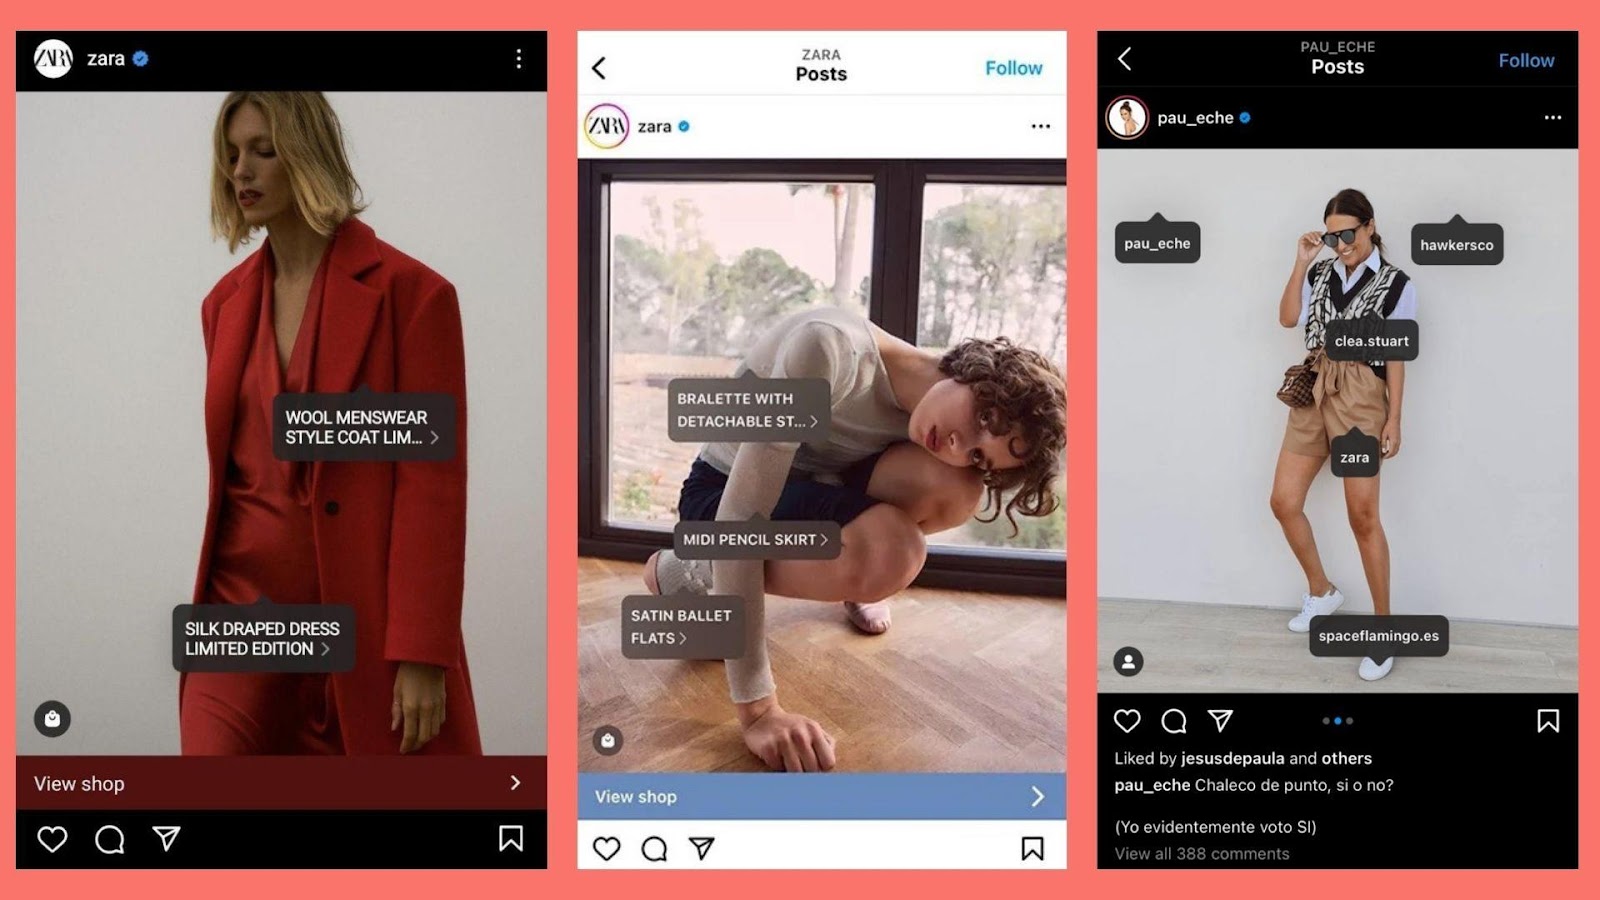 Screenshots from Zara’s shoppable Instagram content.